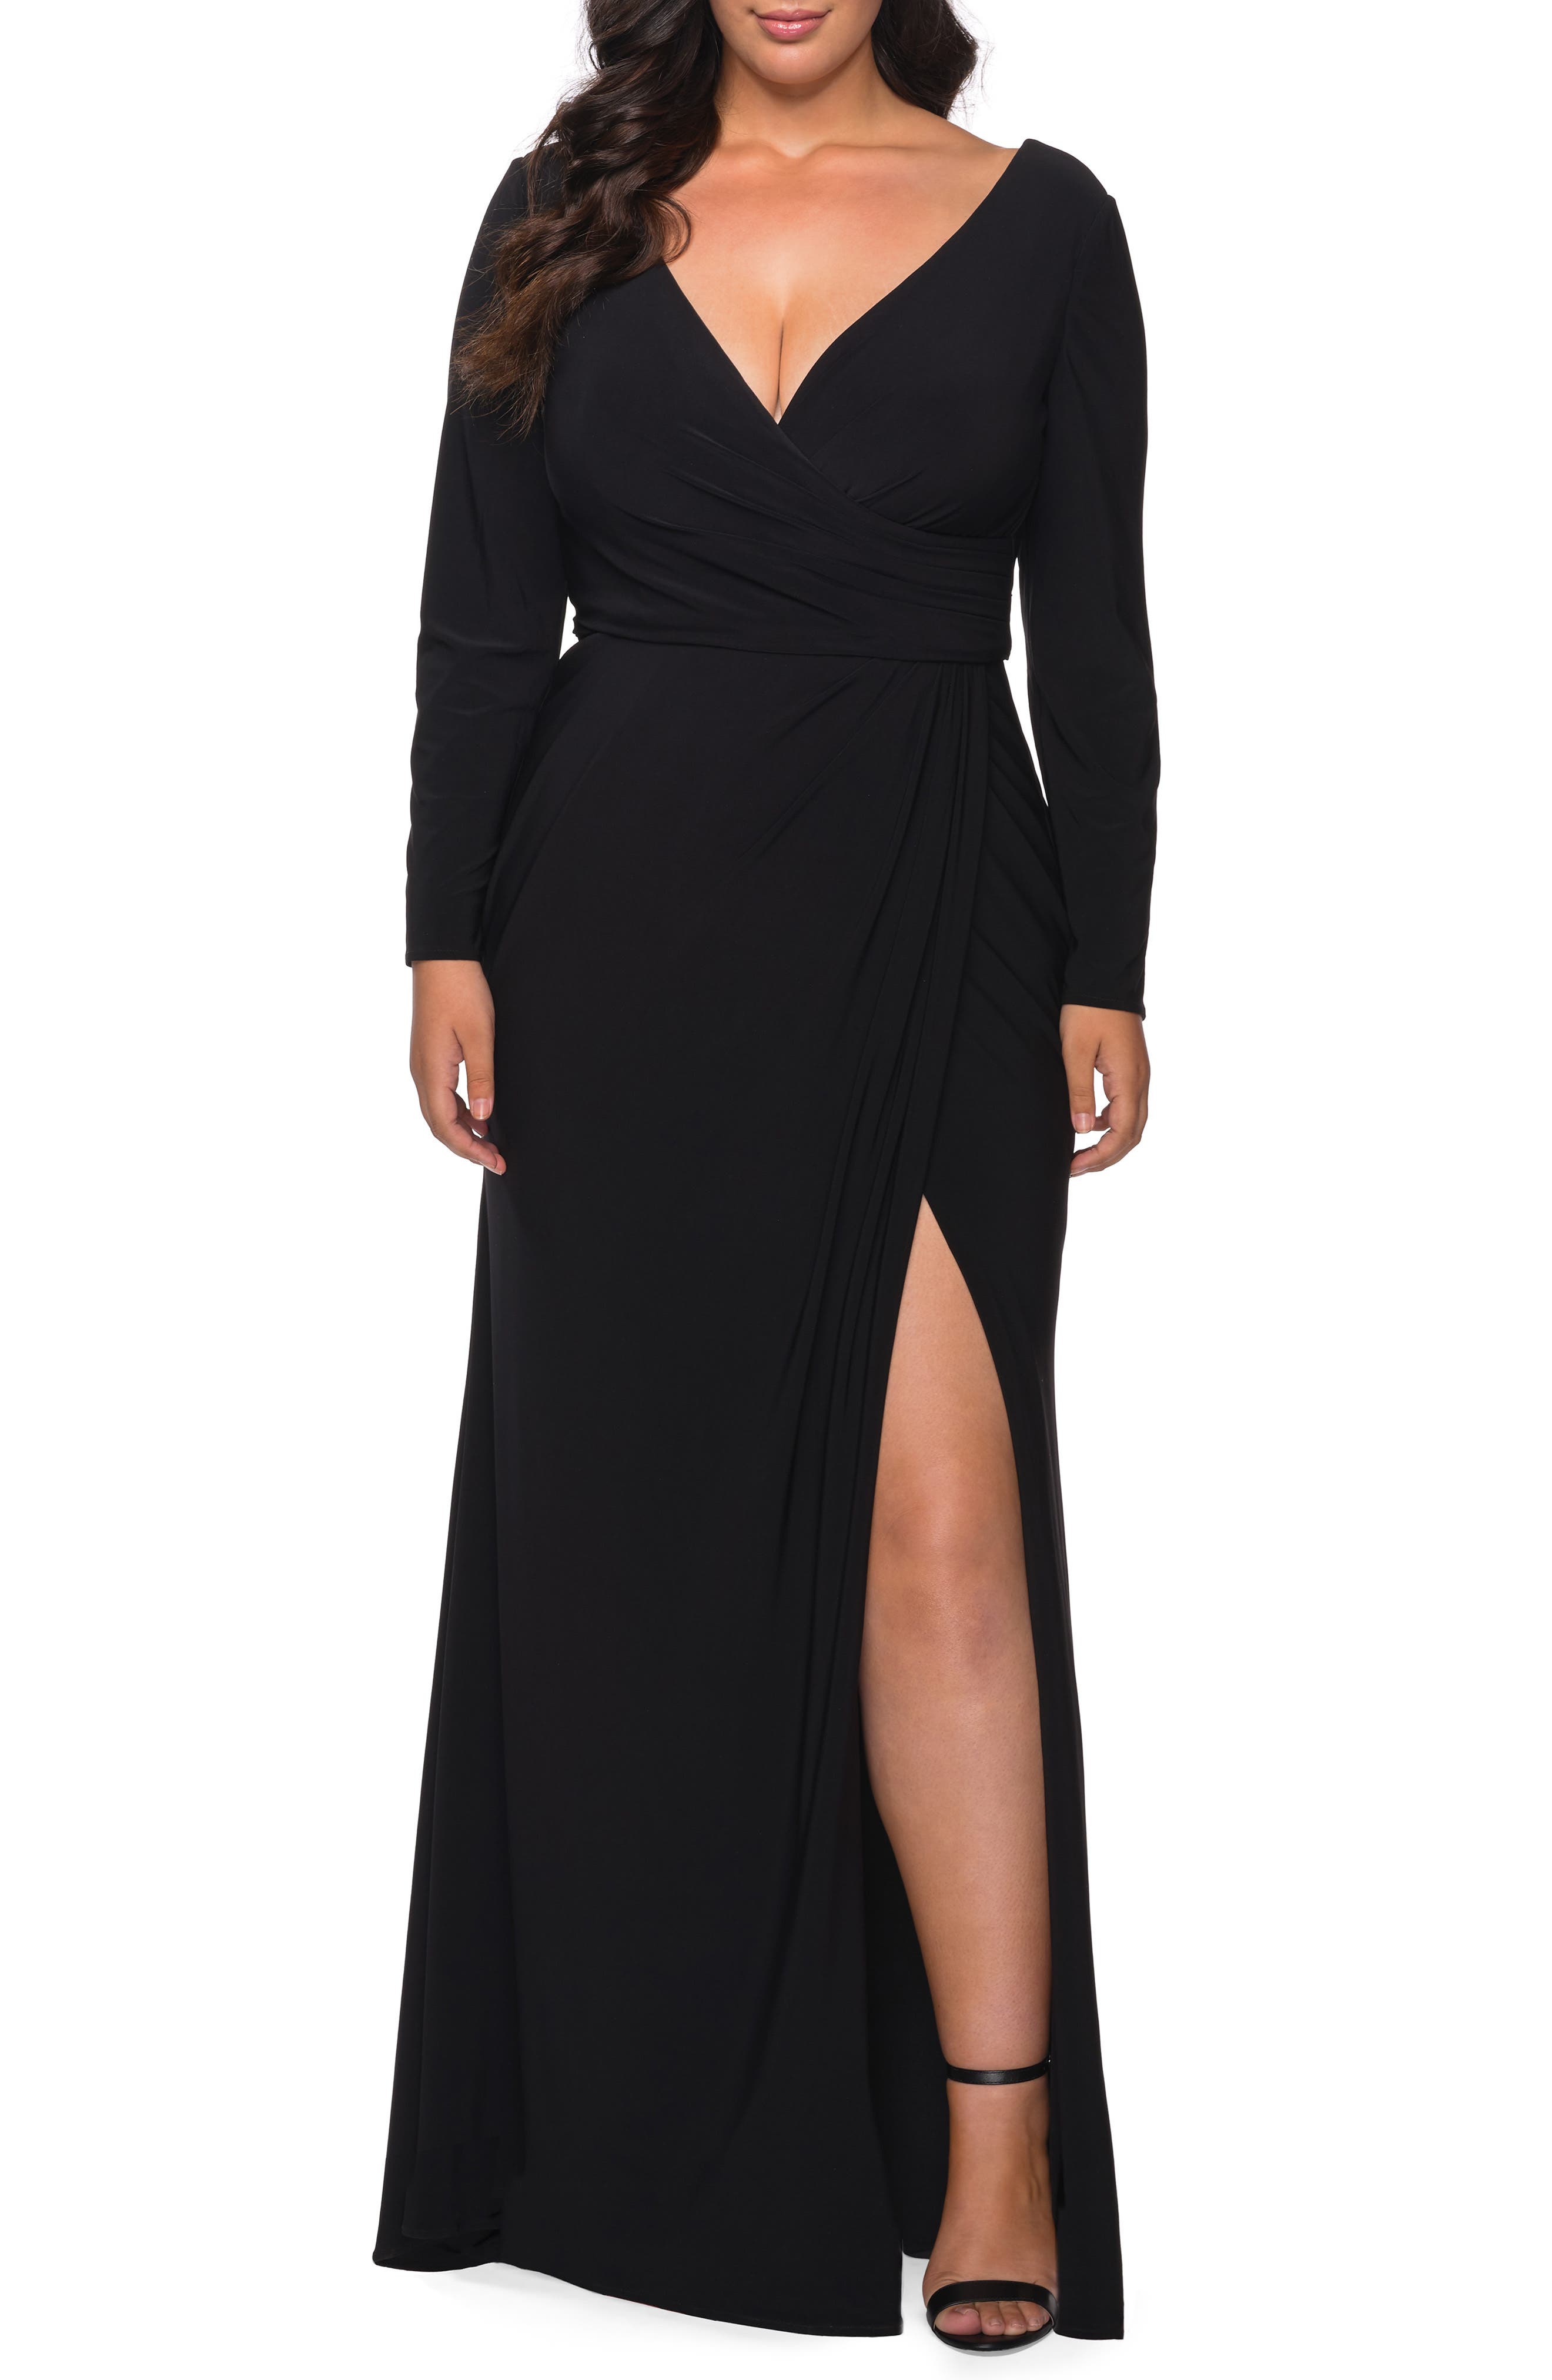 Plus Size Black Wrap Dress Flash Sales ...